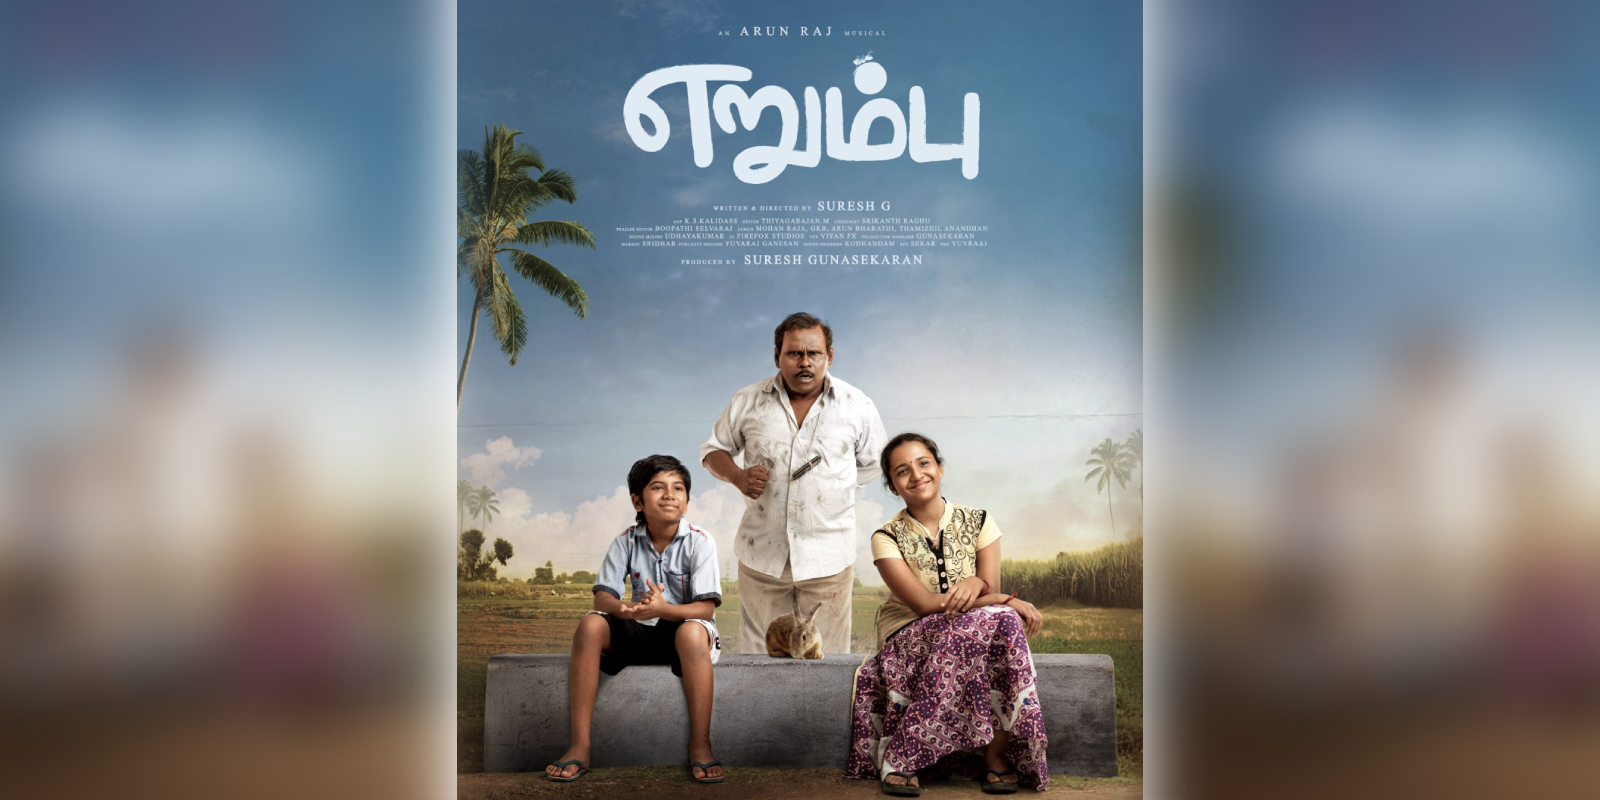 erumbu movie review tamil